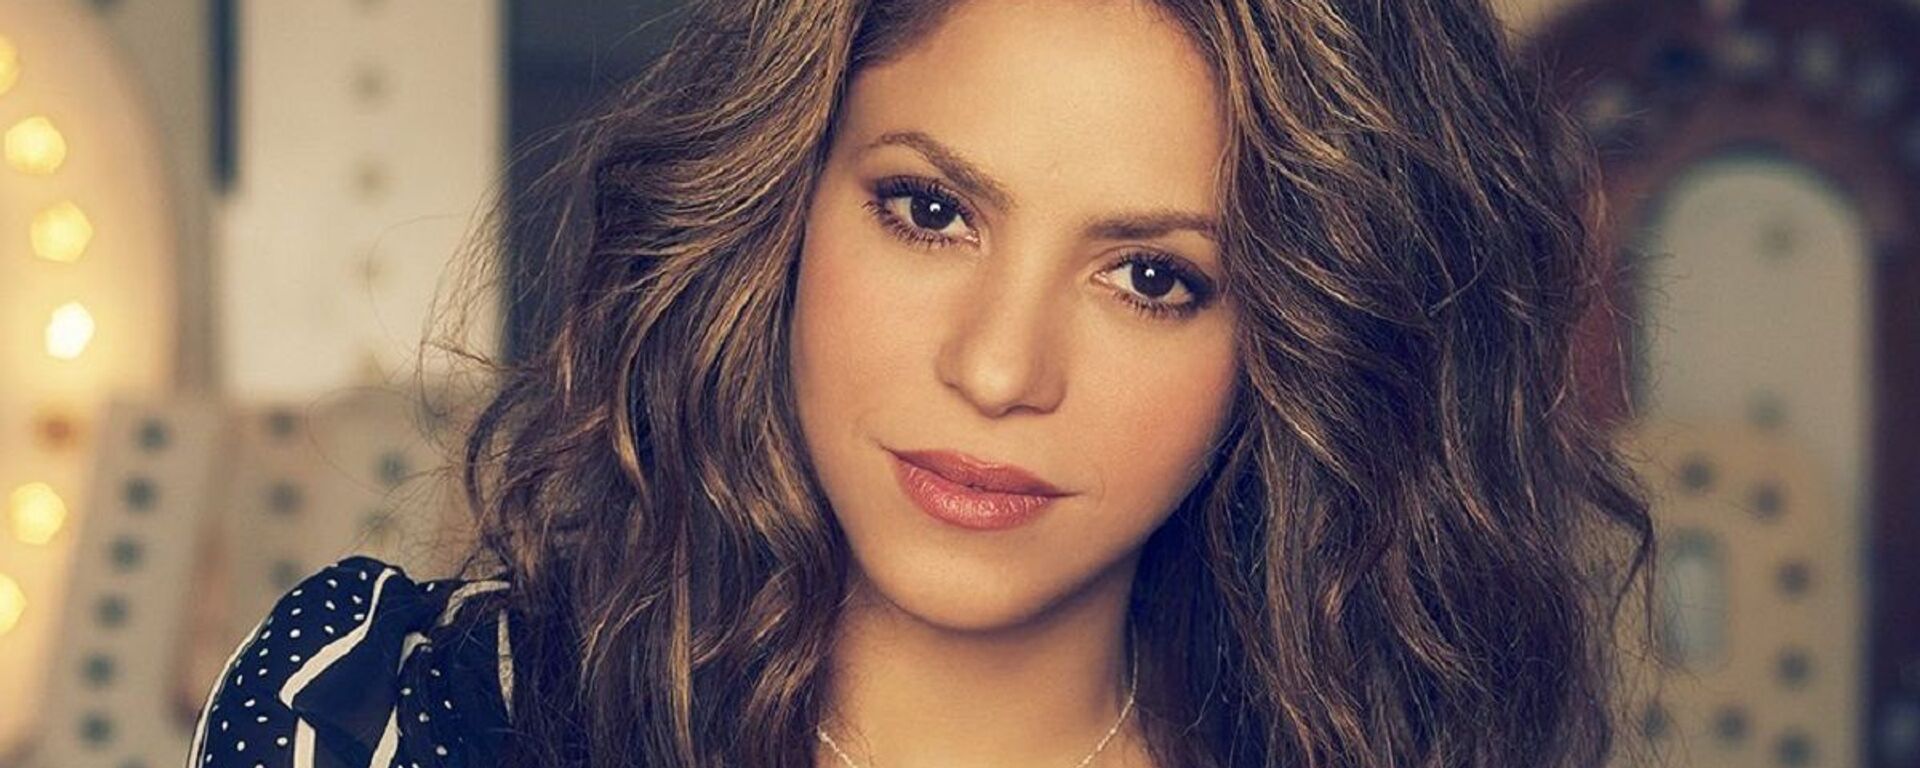 Shakira, cantante colombiana - Sputnik Mundo, 1920, 30.08.2020